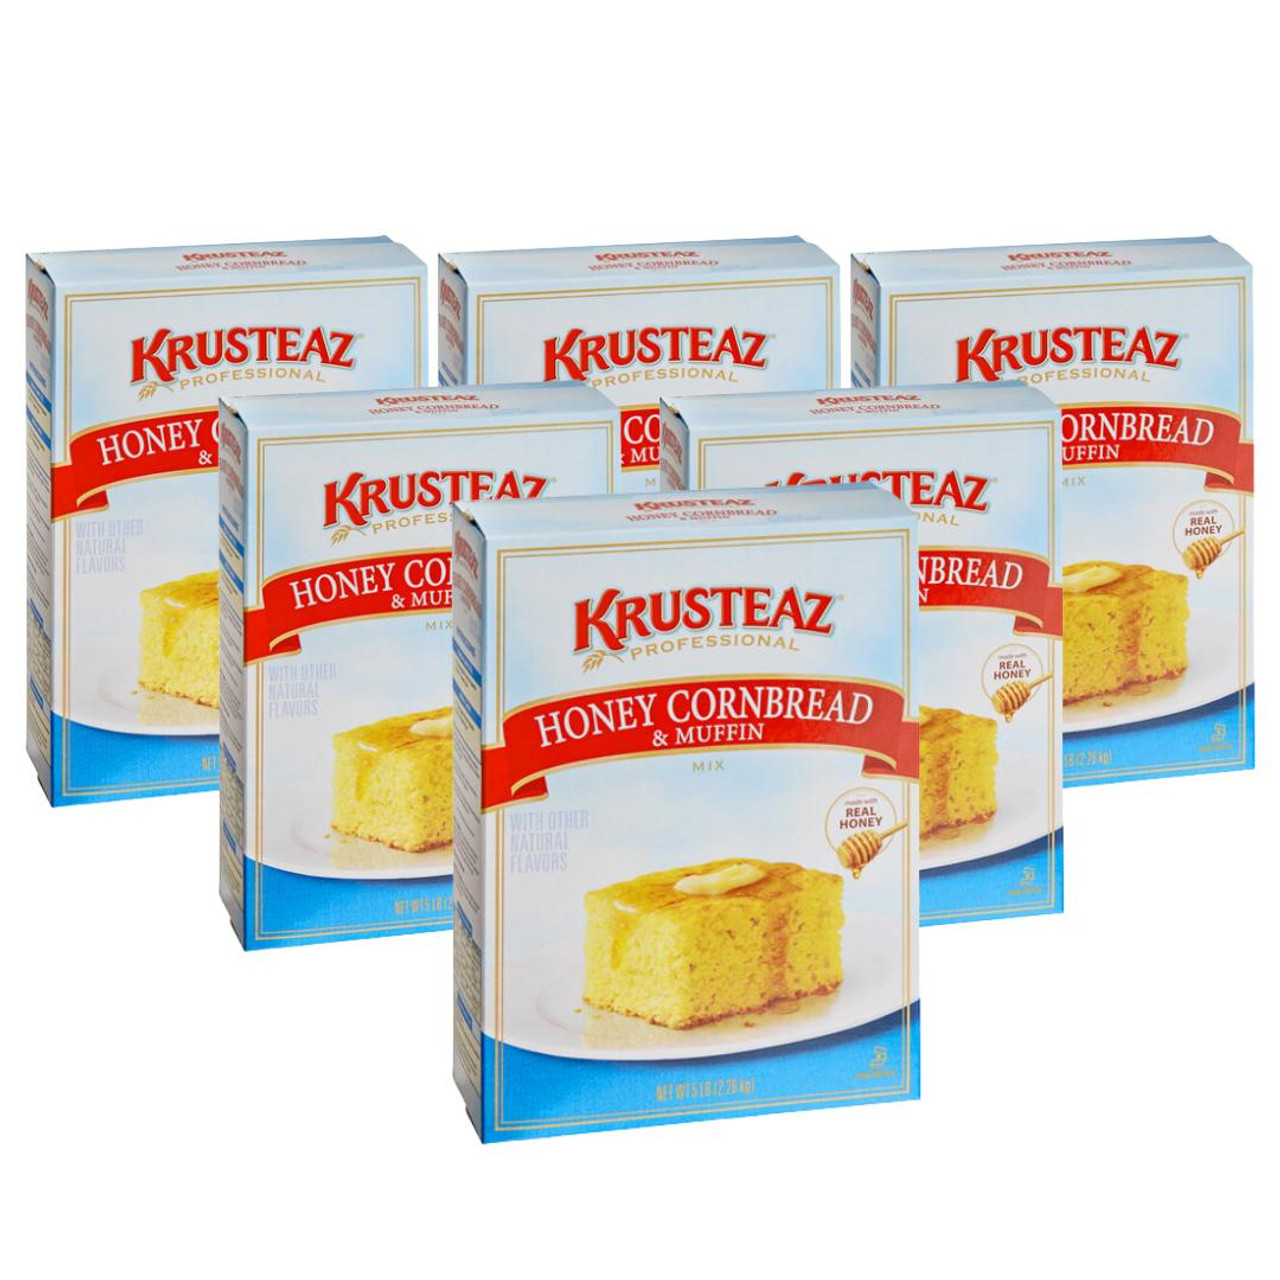 krusteaz Krusteaz Professional Honey Cornbread and Muffin Mix 5 lbs/2.26 kgs - 6/Case 